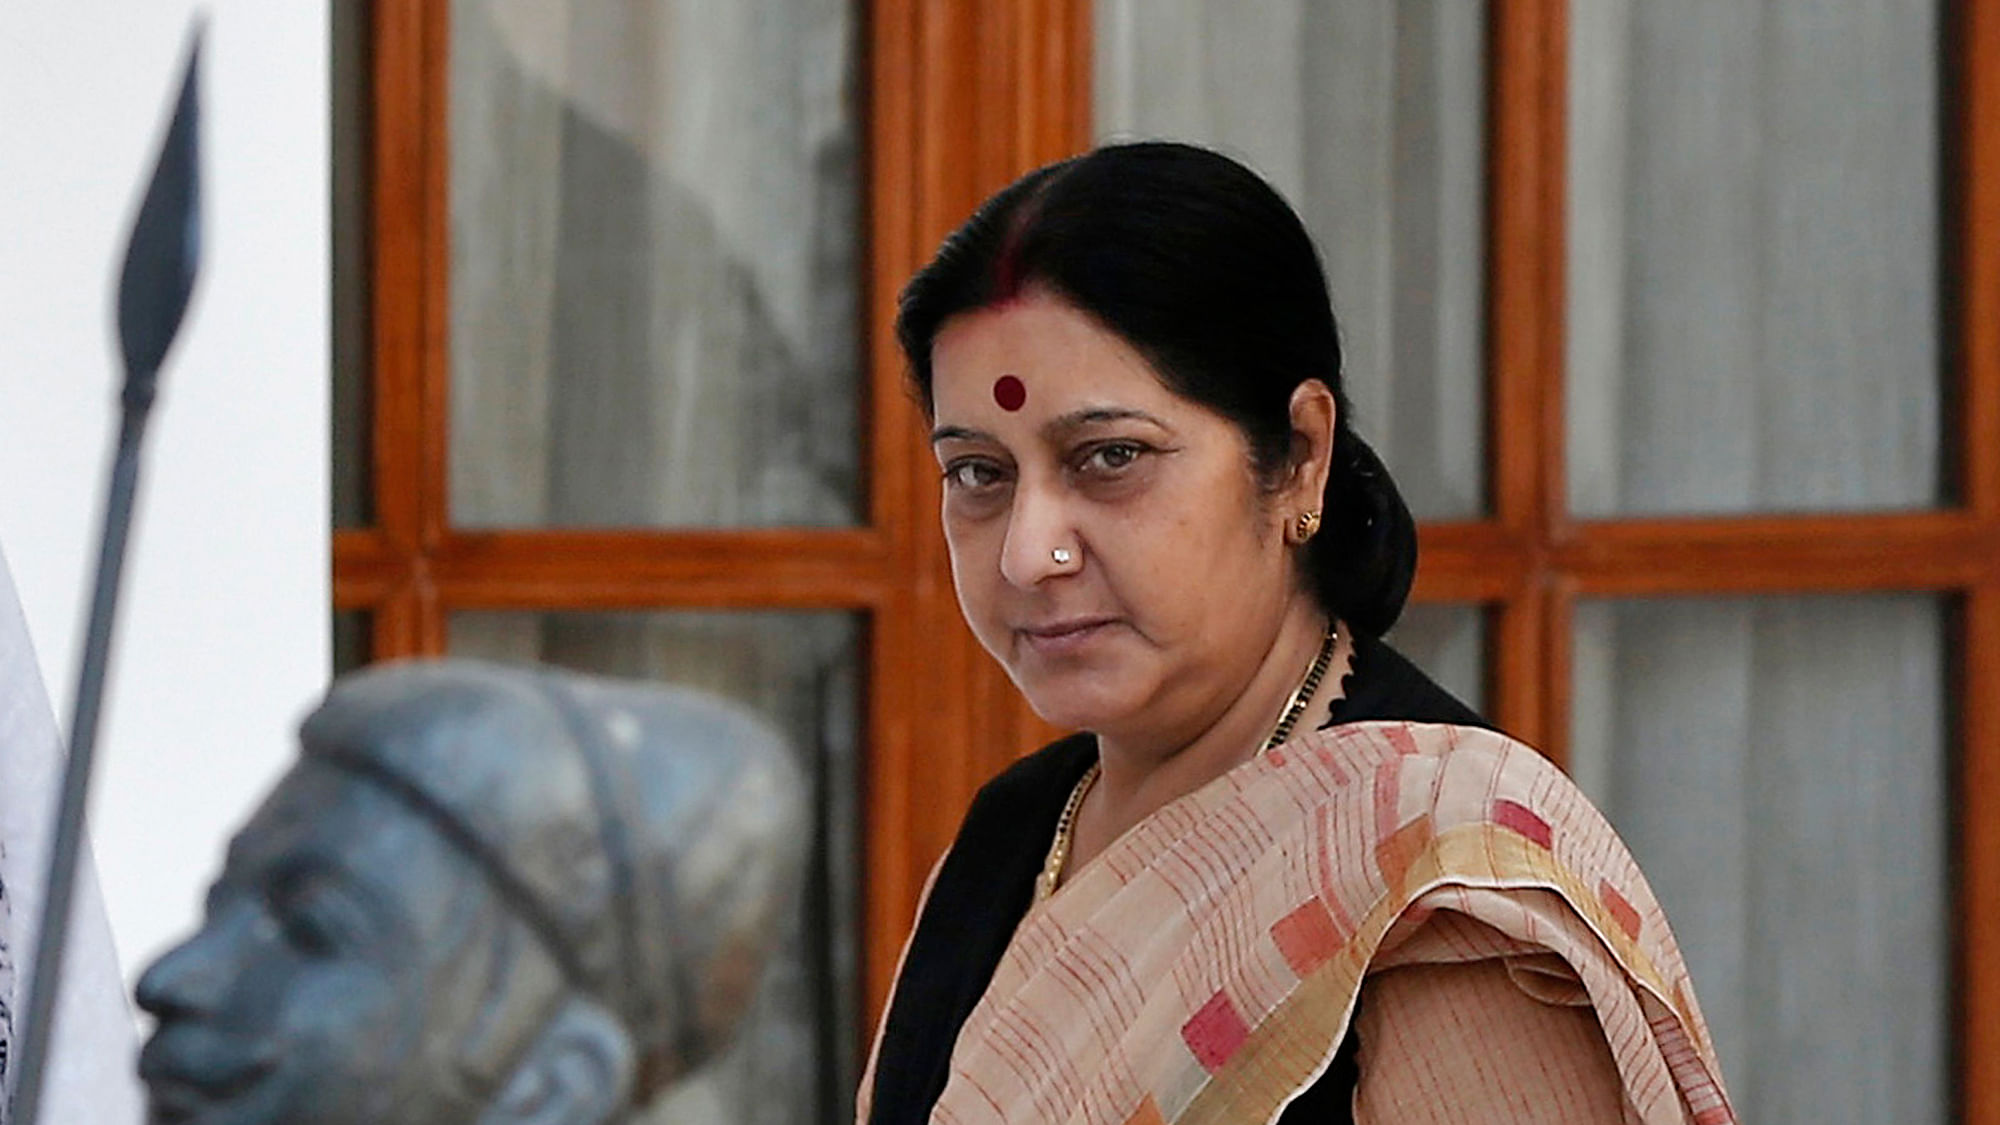 External Affairs Minister Sushma Swaraj.